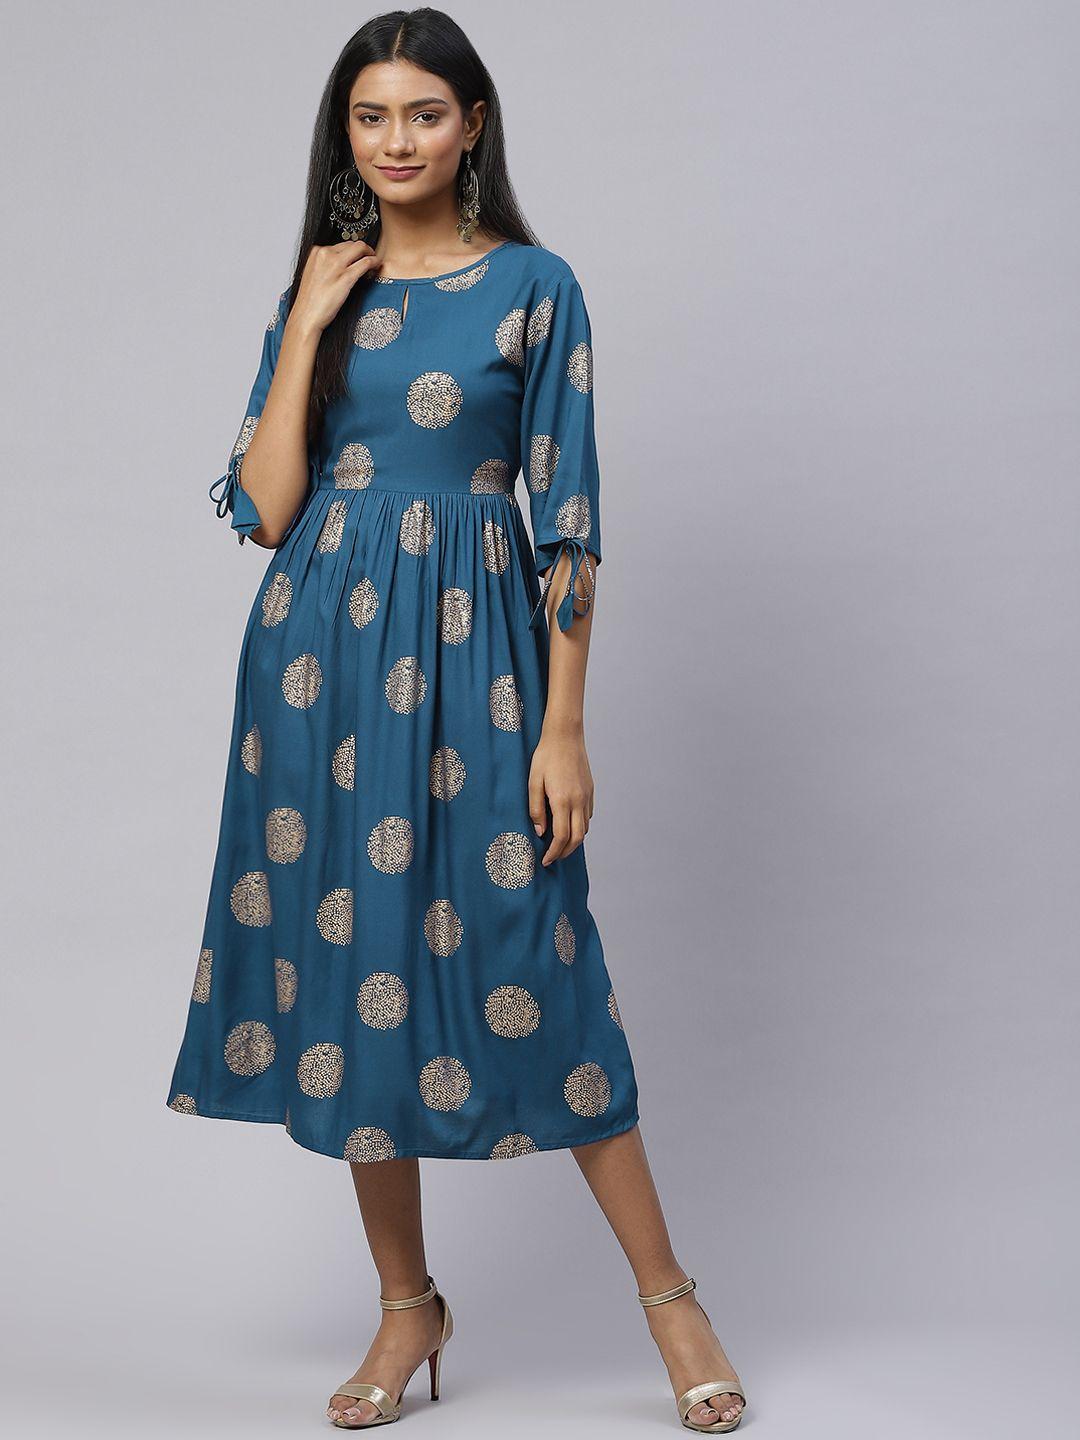 svarchi teal blue & golden ethnic motifs ethnic a-line midi dress